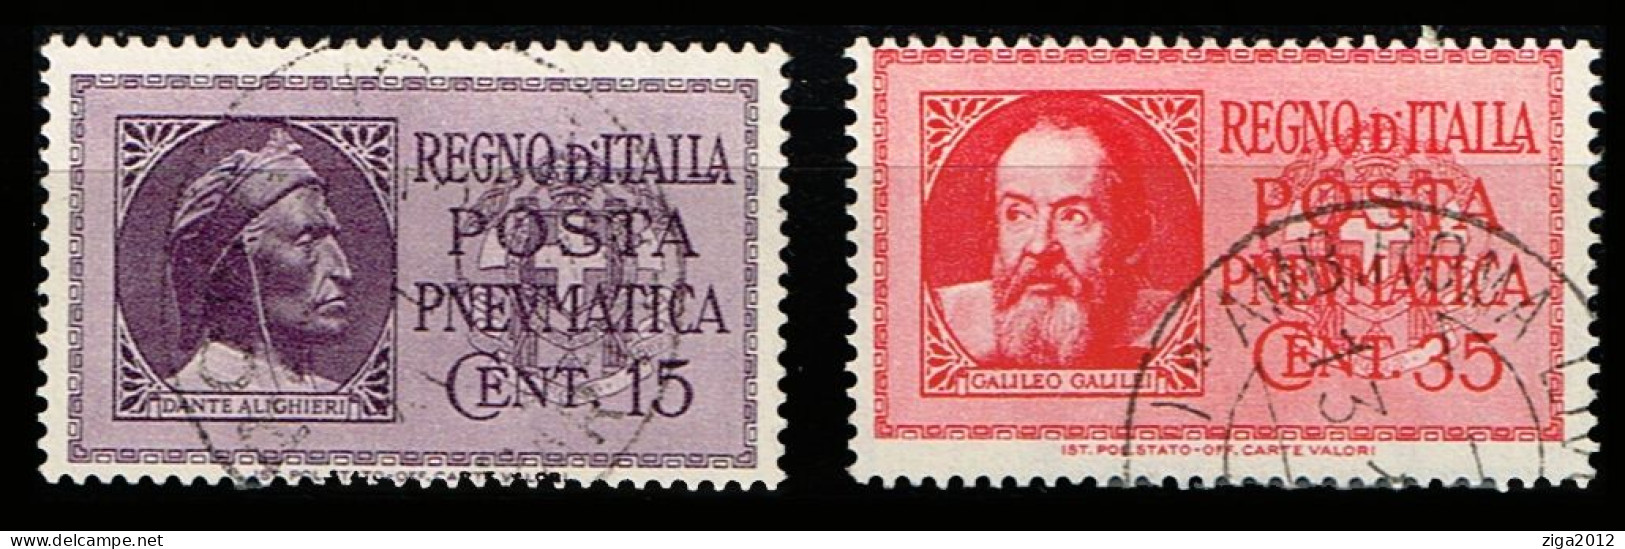 ITALY 1933 SERIE COMPLETA DEI FRANCOBOLLI DI POSTA PNEUMATICA - ANNULLATI - Pneumatische Post